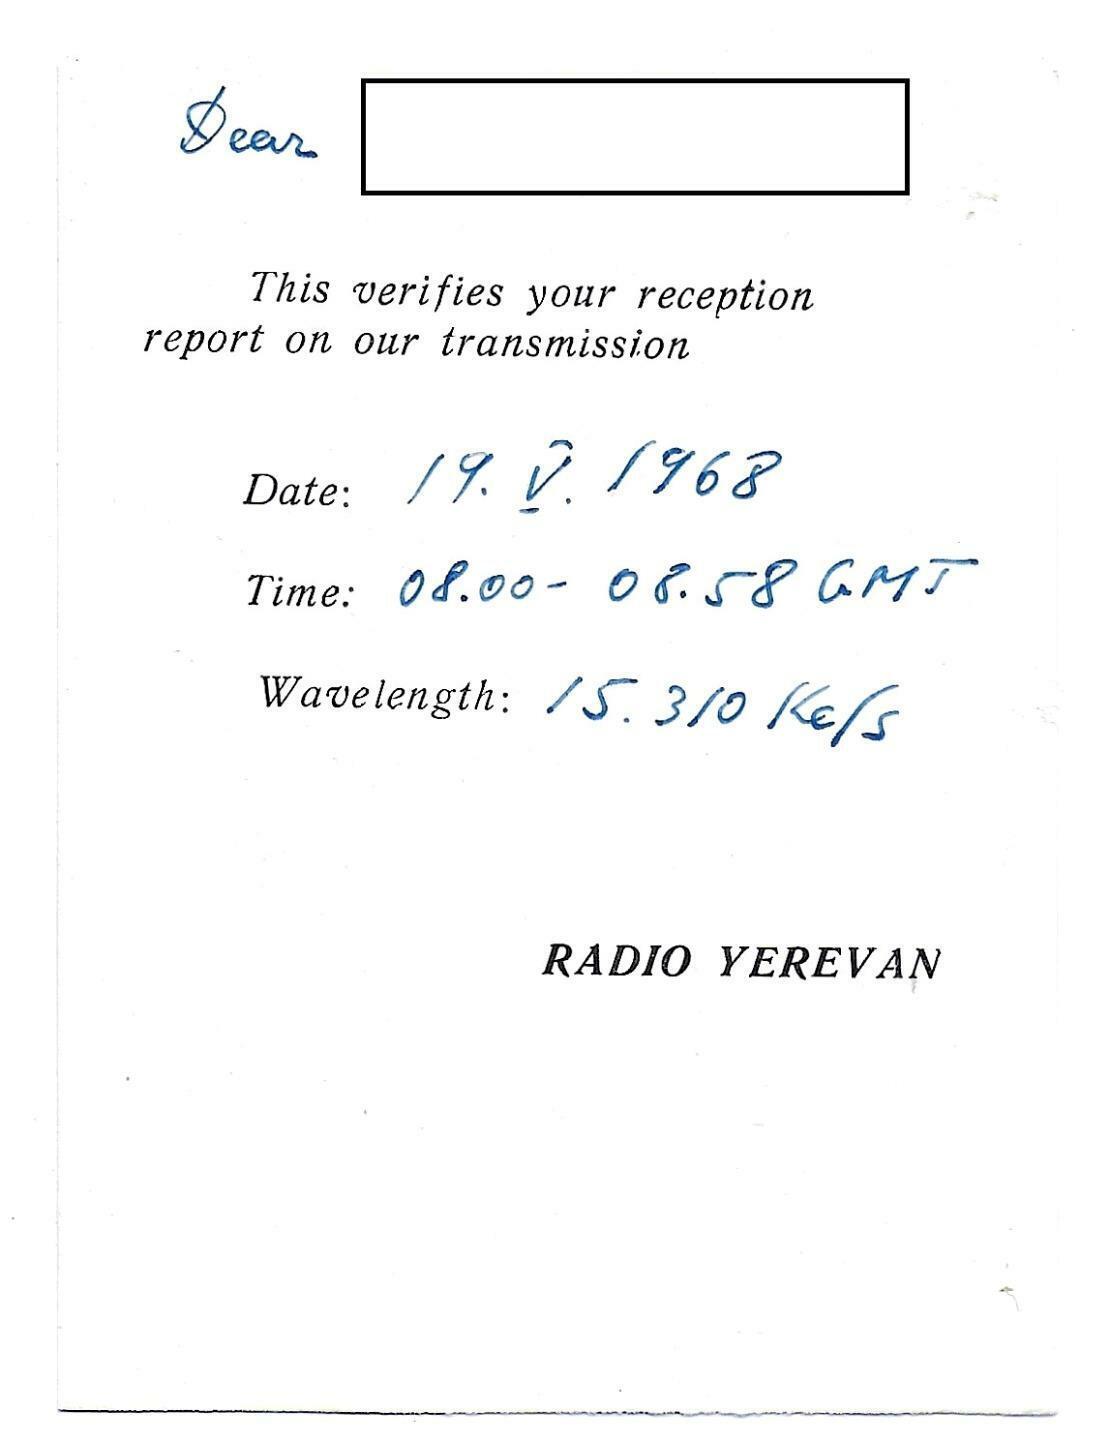 QSL Radio Yerevan Armenian Soviet Socialist Republic 1968 on 15310 kcs DX SWL